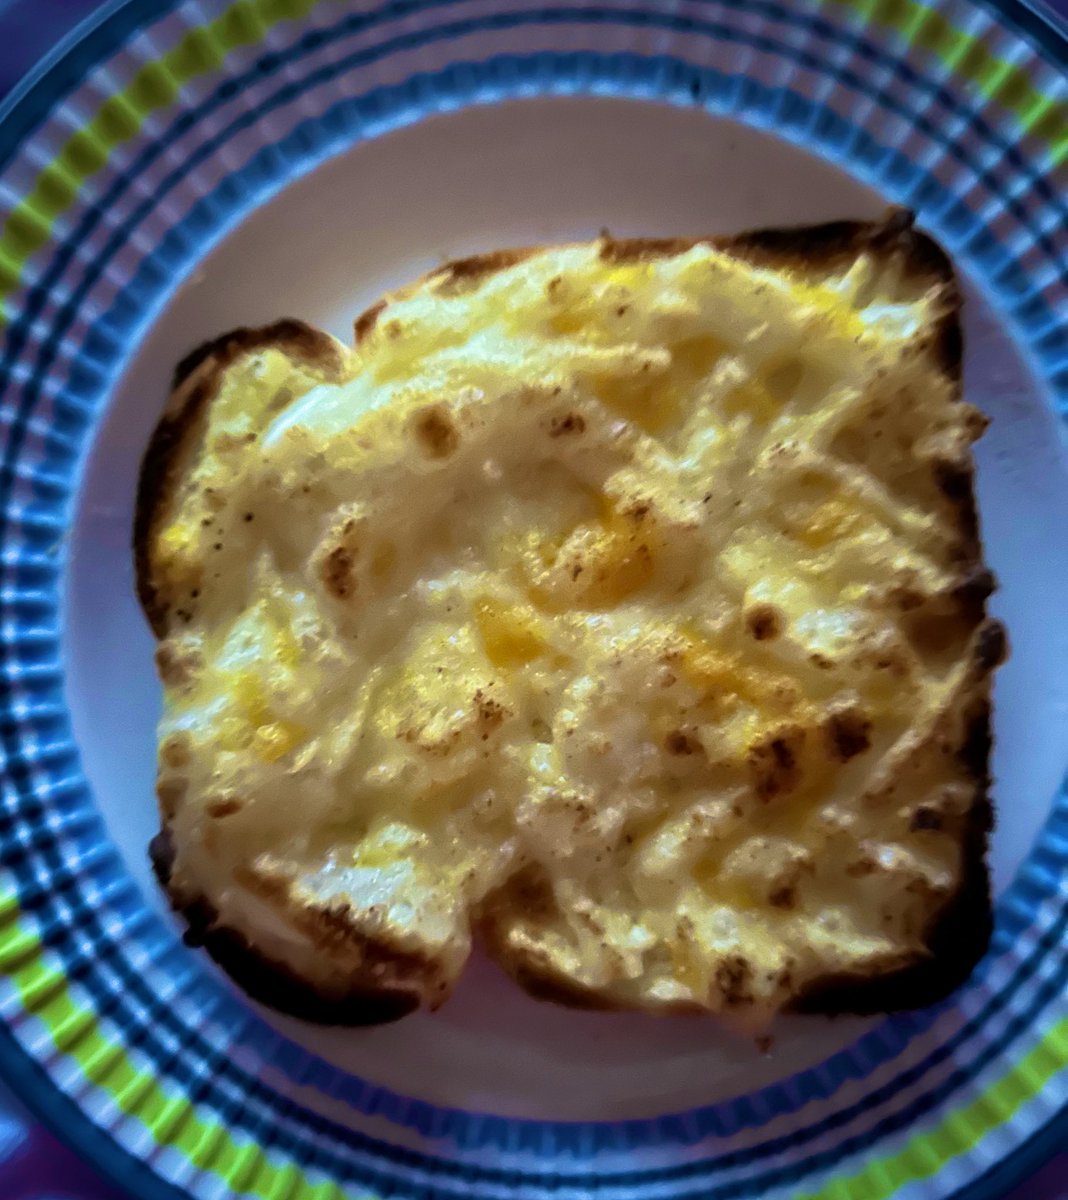 Hubby made garlic and #VeganCheese toast. Tis yummmmmyyy. #veganrecipes #NotBad #TryIt #Vegan